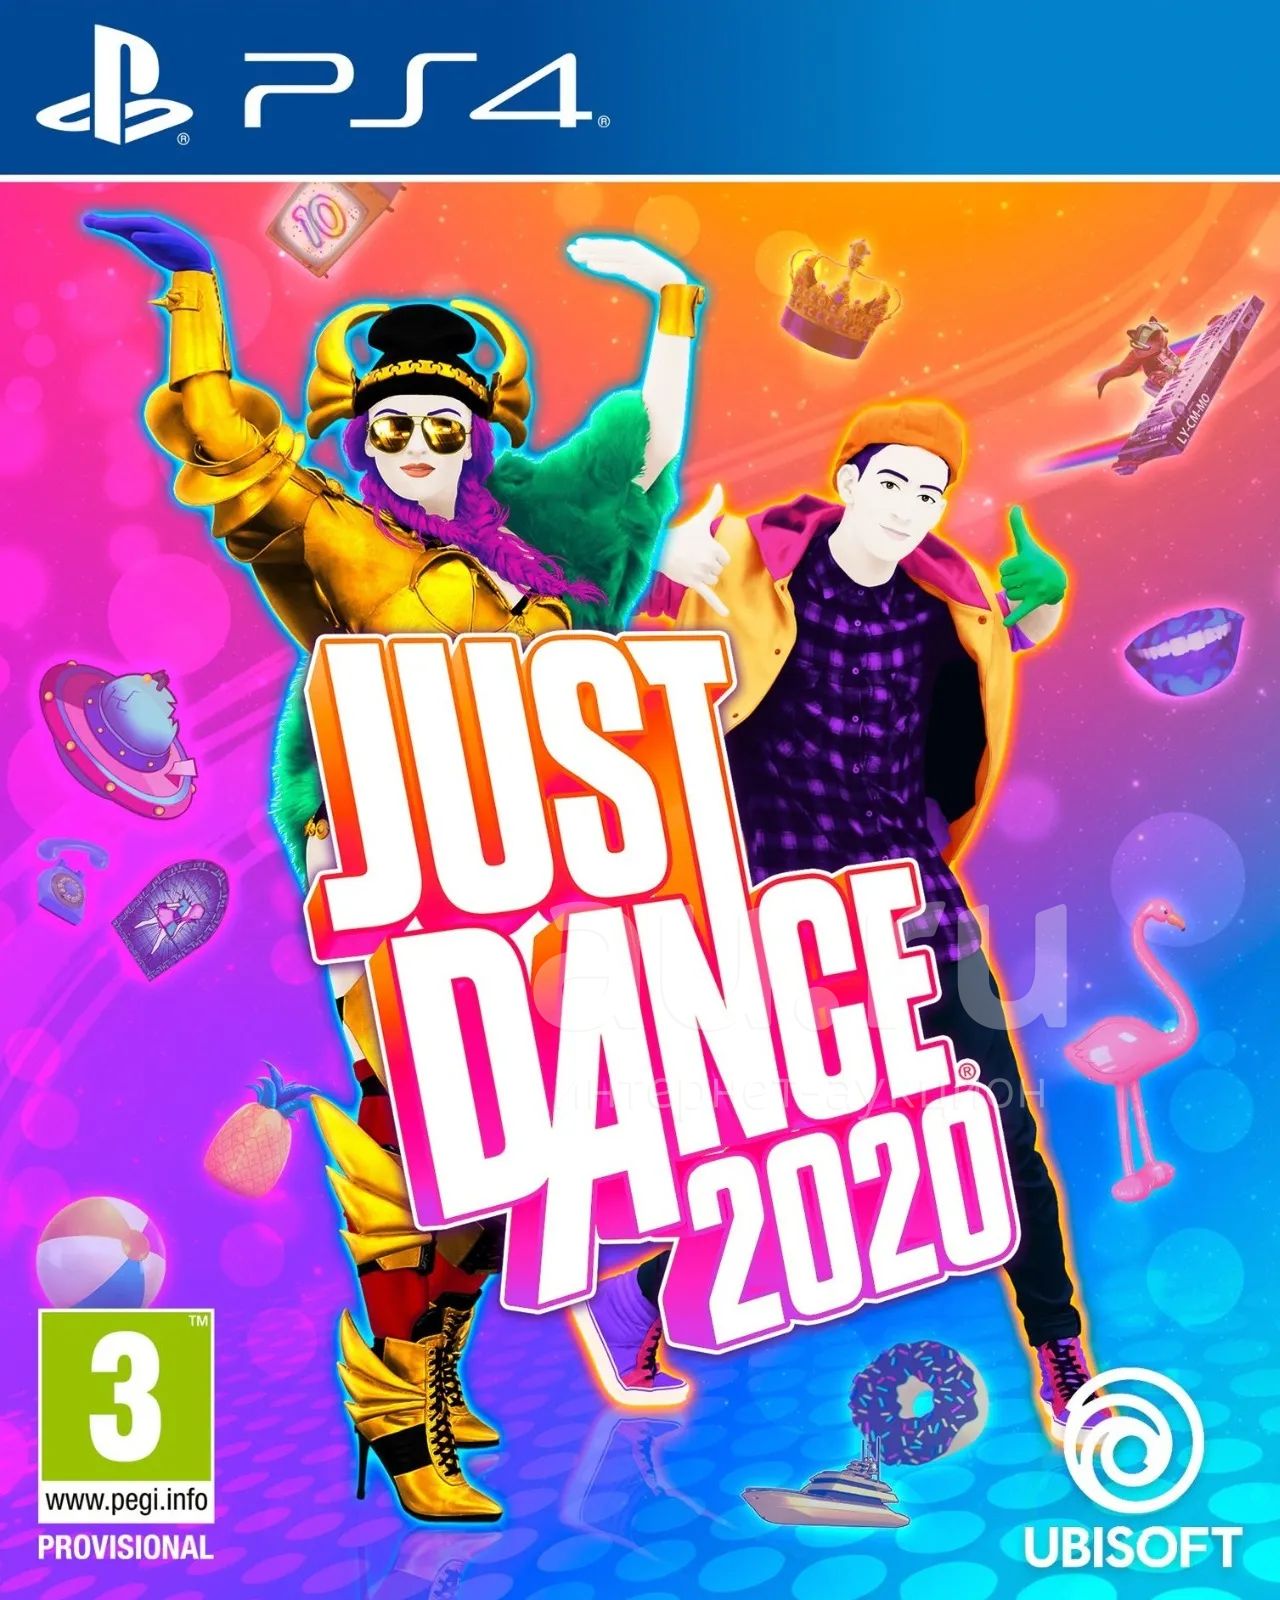 Игры в джаз. Just Dance 2020 (Xbox one). Диск Xbox 360 just Dance 2020. Just Dance 2020 ps4 диск. Just Dance 2020 Xbox 360.